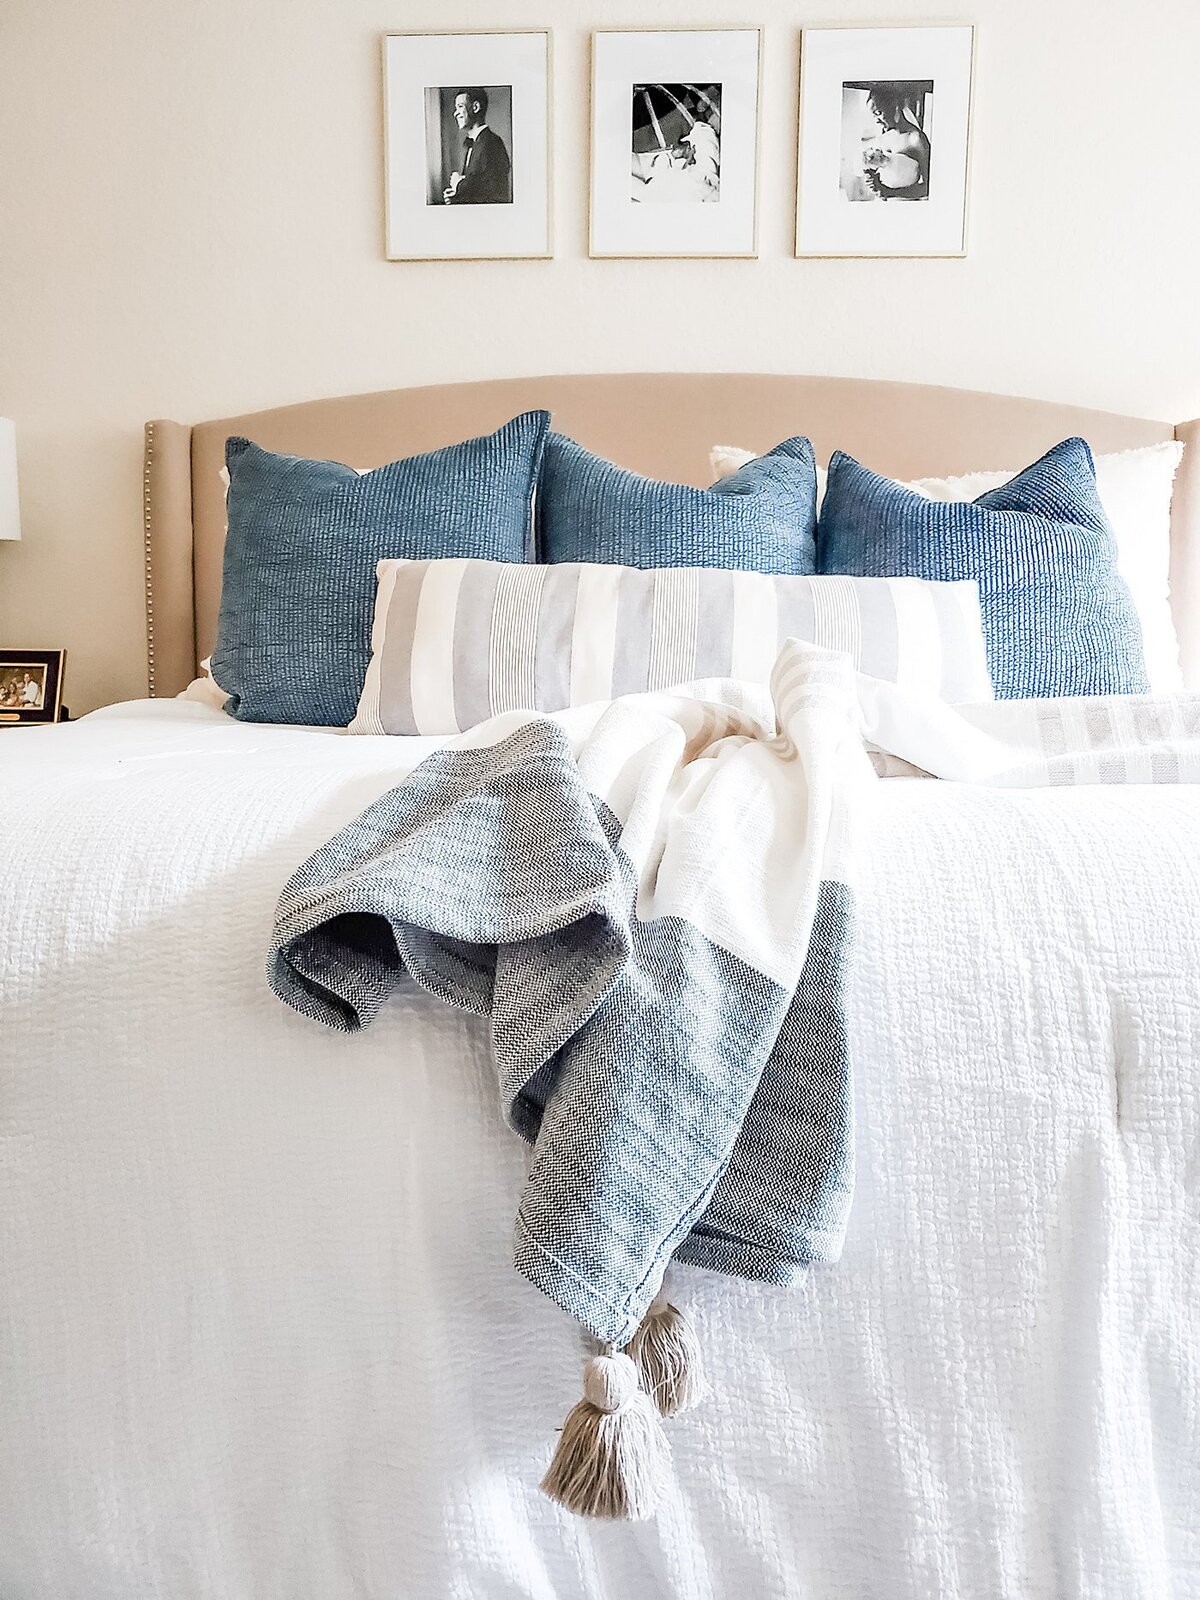 Island Home Interiors coastal throw pillows in Master Bedroom Distance Design Lake Nona